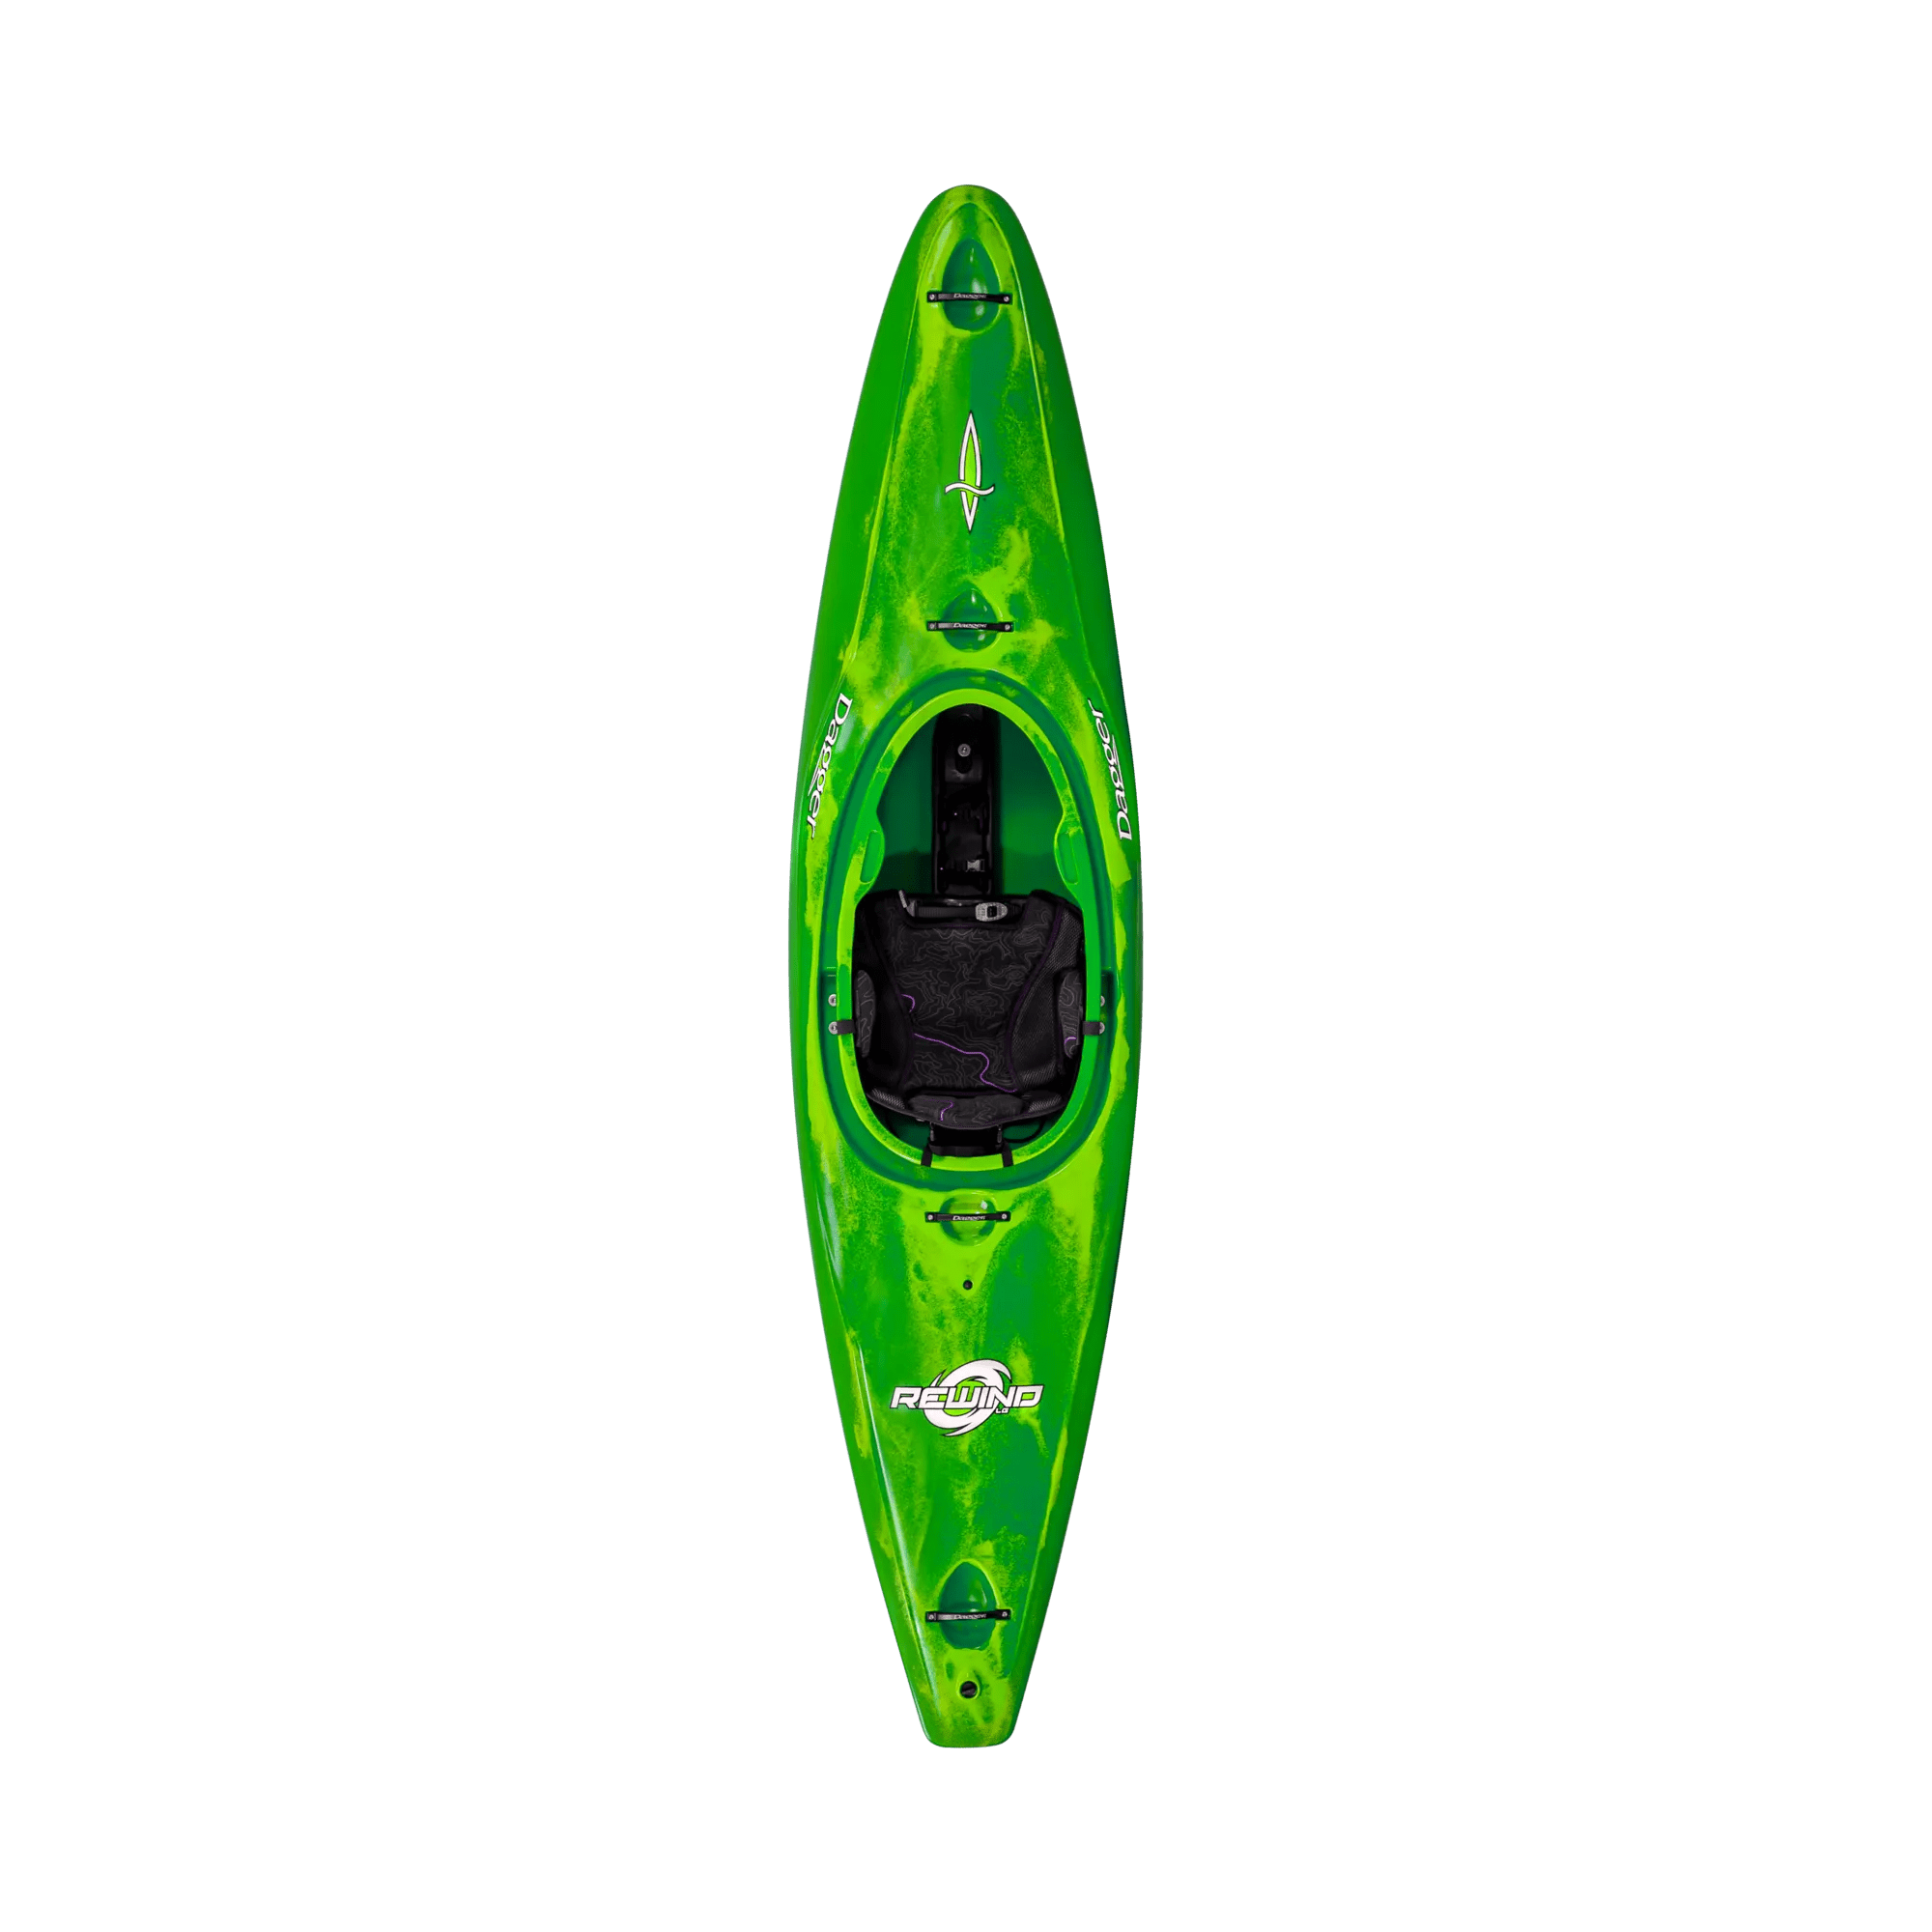 DAGGER - Rewind SM River Play Whitewater Kayak - Green - 9010474207 - TOP